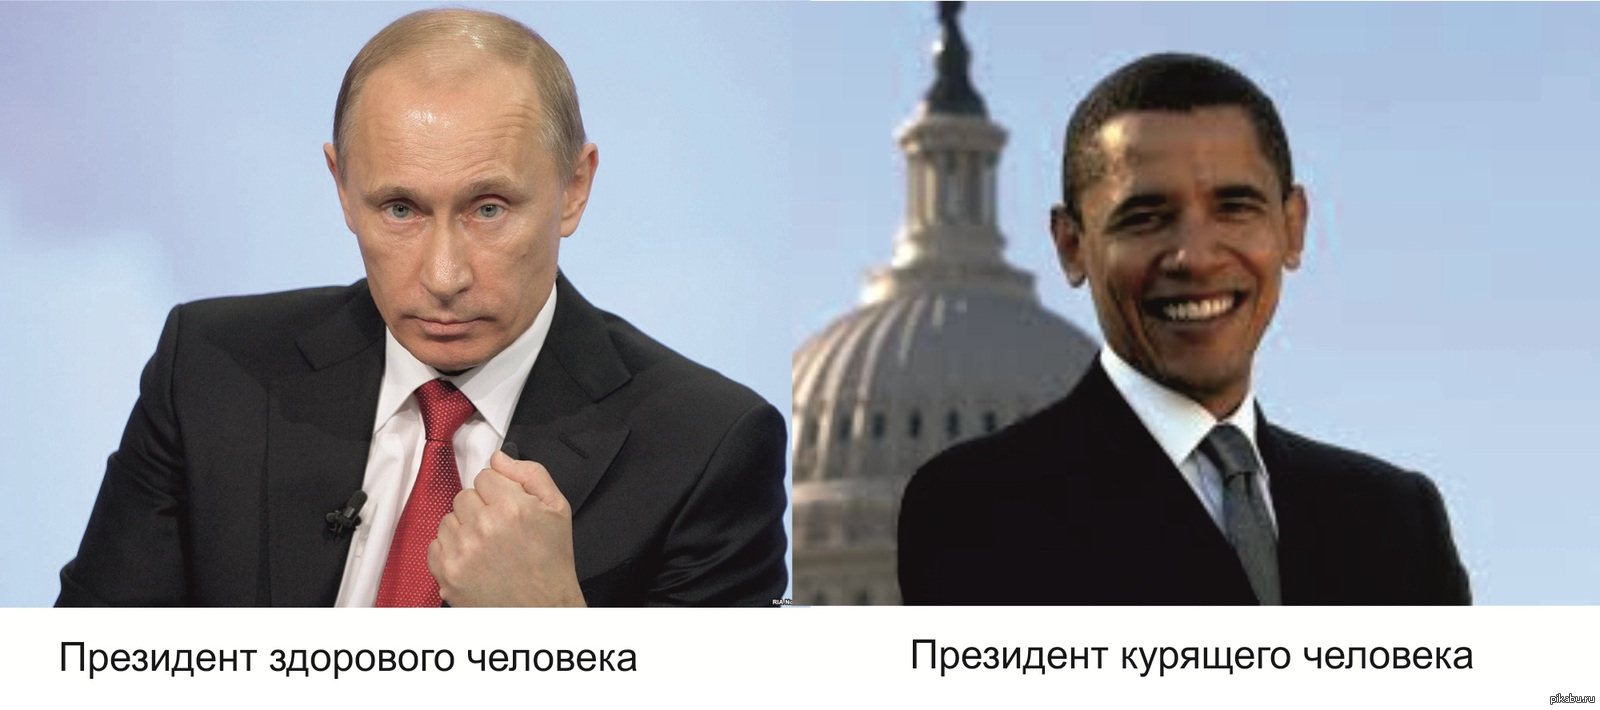 Фото Путина Различие